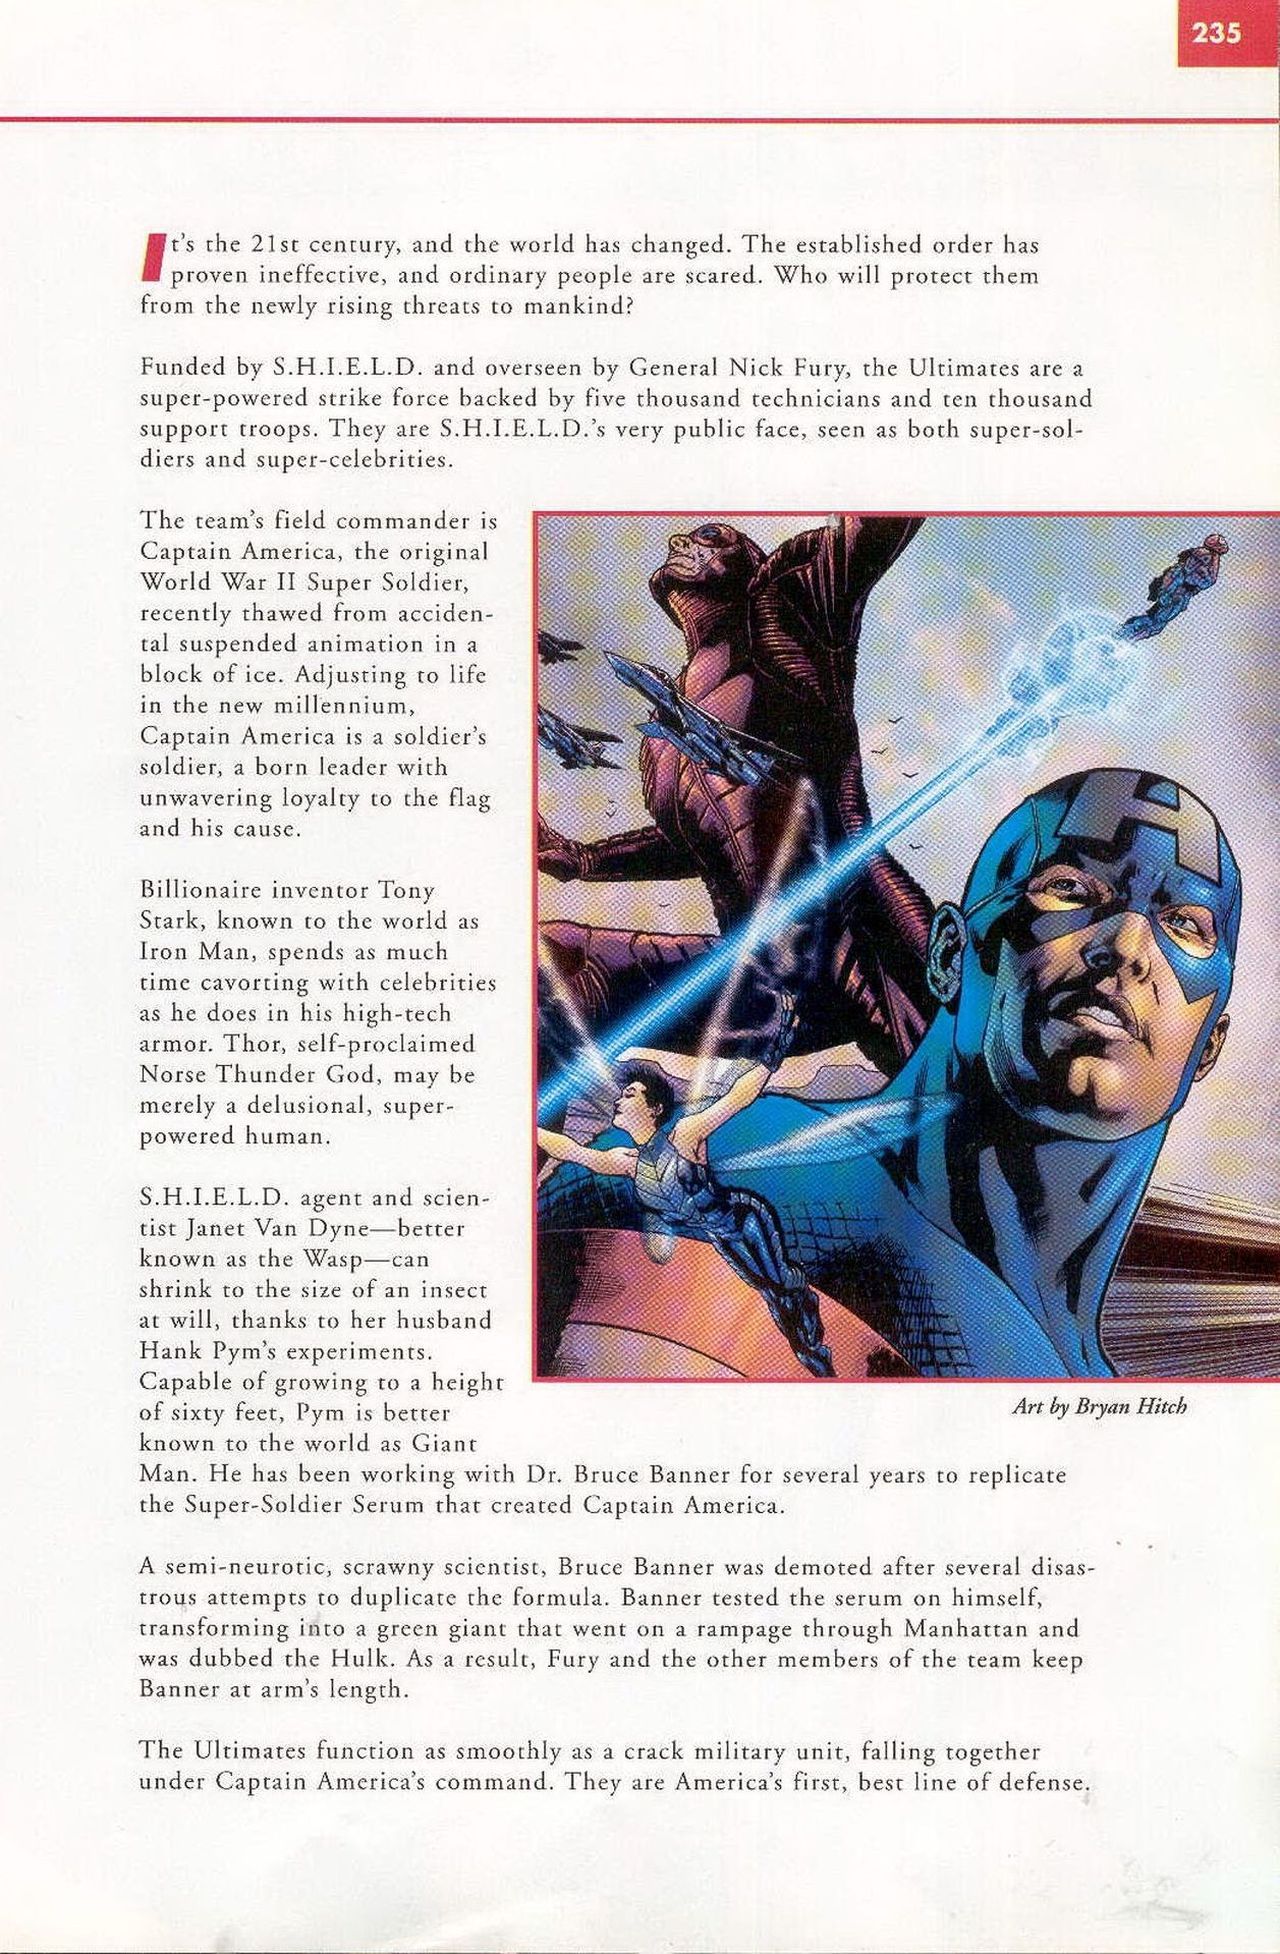 Read online Marvel Encyclopedia comic -  Issue # TPB 1 - 233